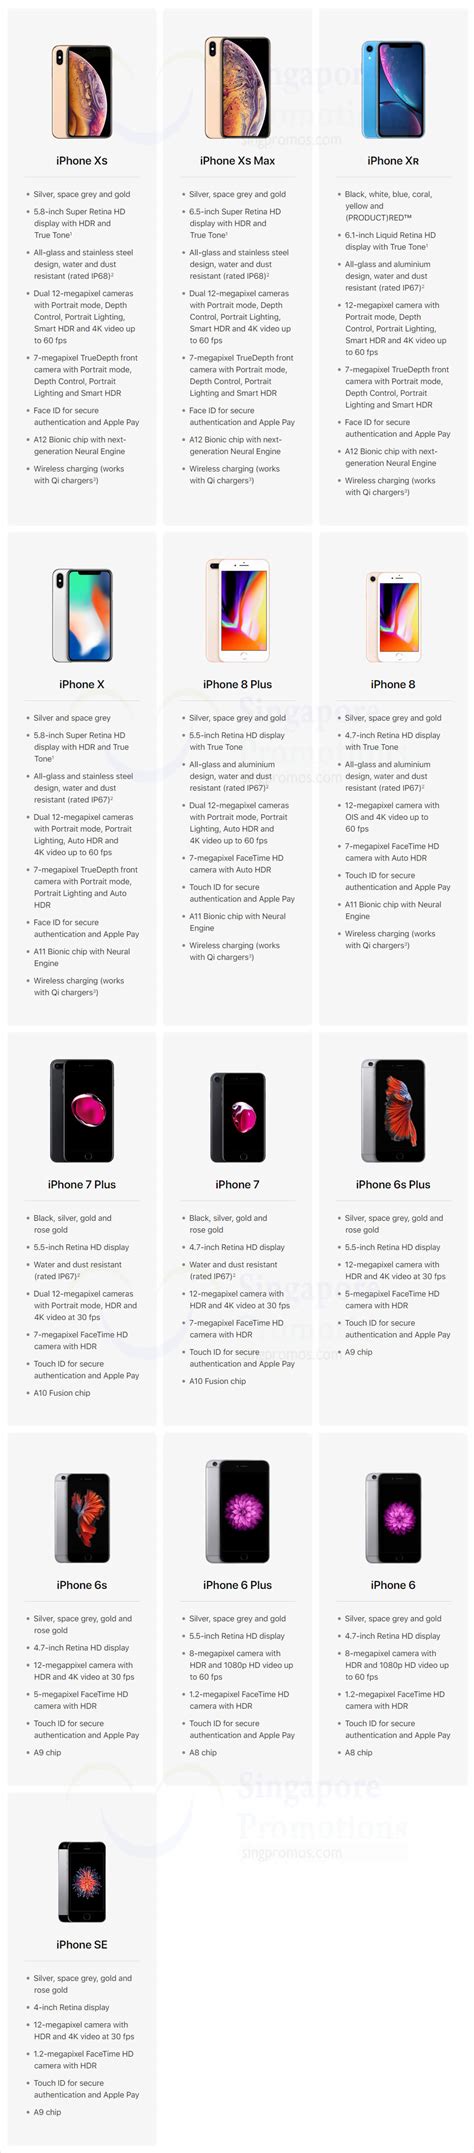 Apple IPhone Comparison Chart